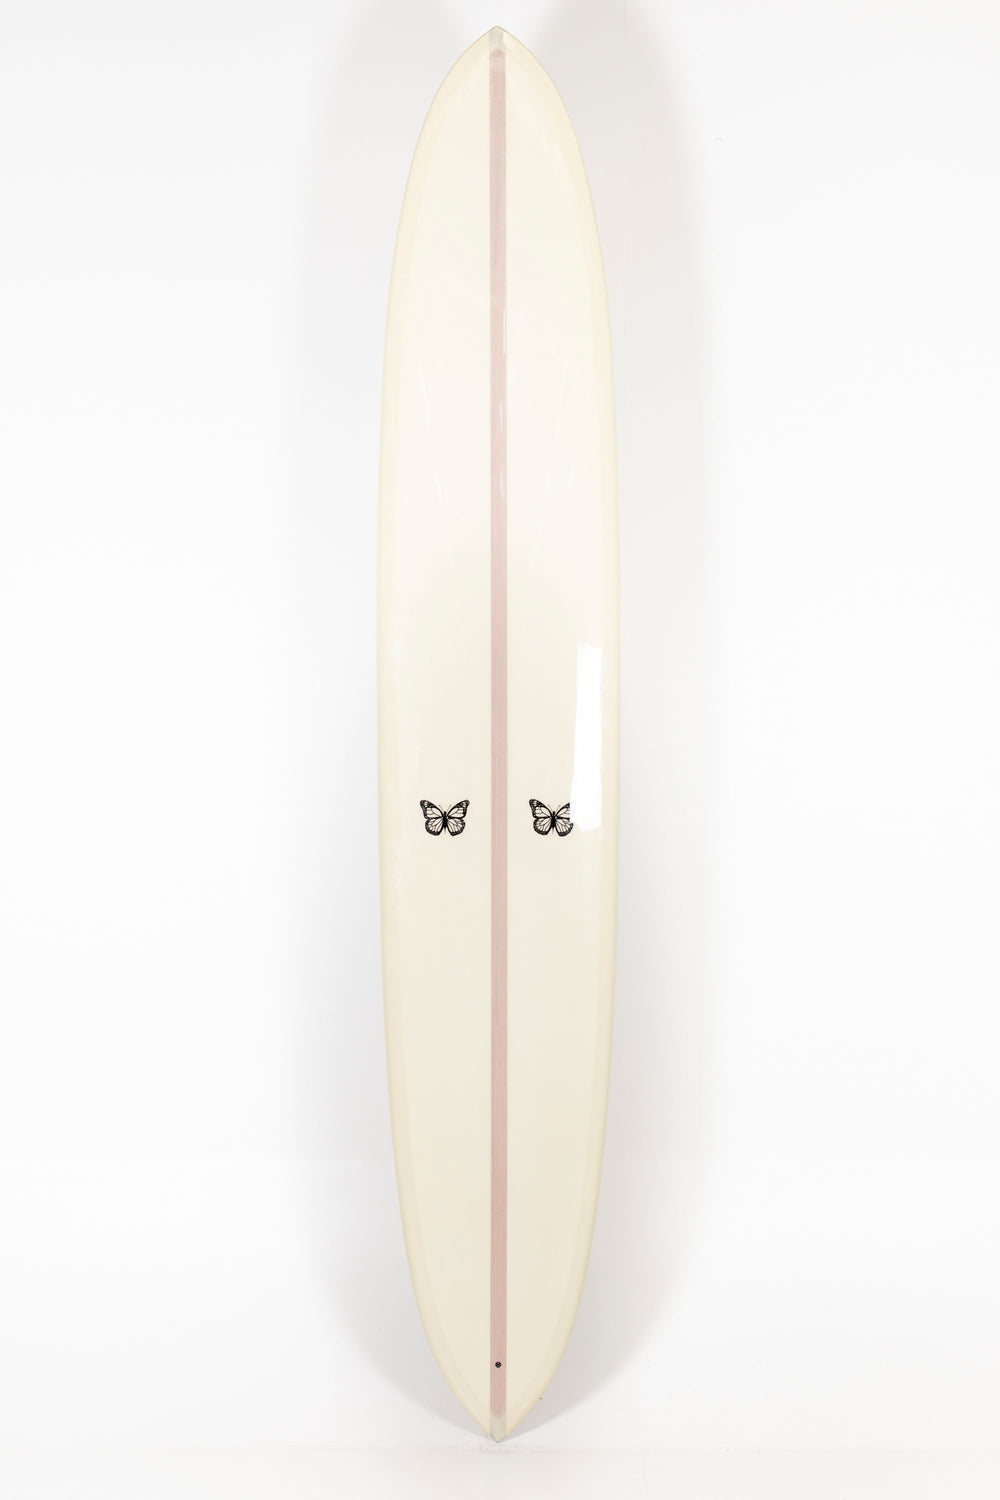 Pukas Surf Shop - Garmendia Surfboards - GLIDER DREAMER- 11'2